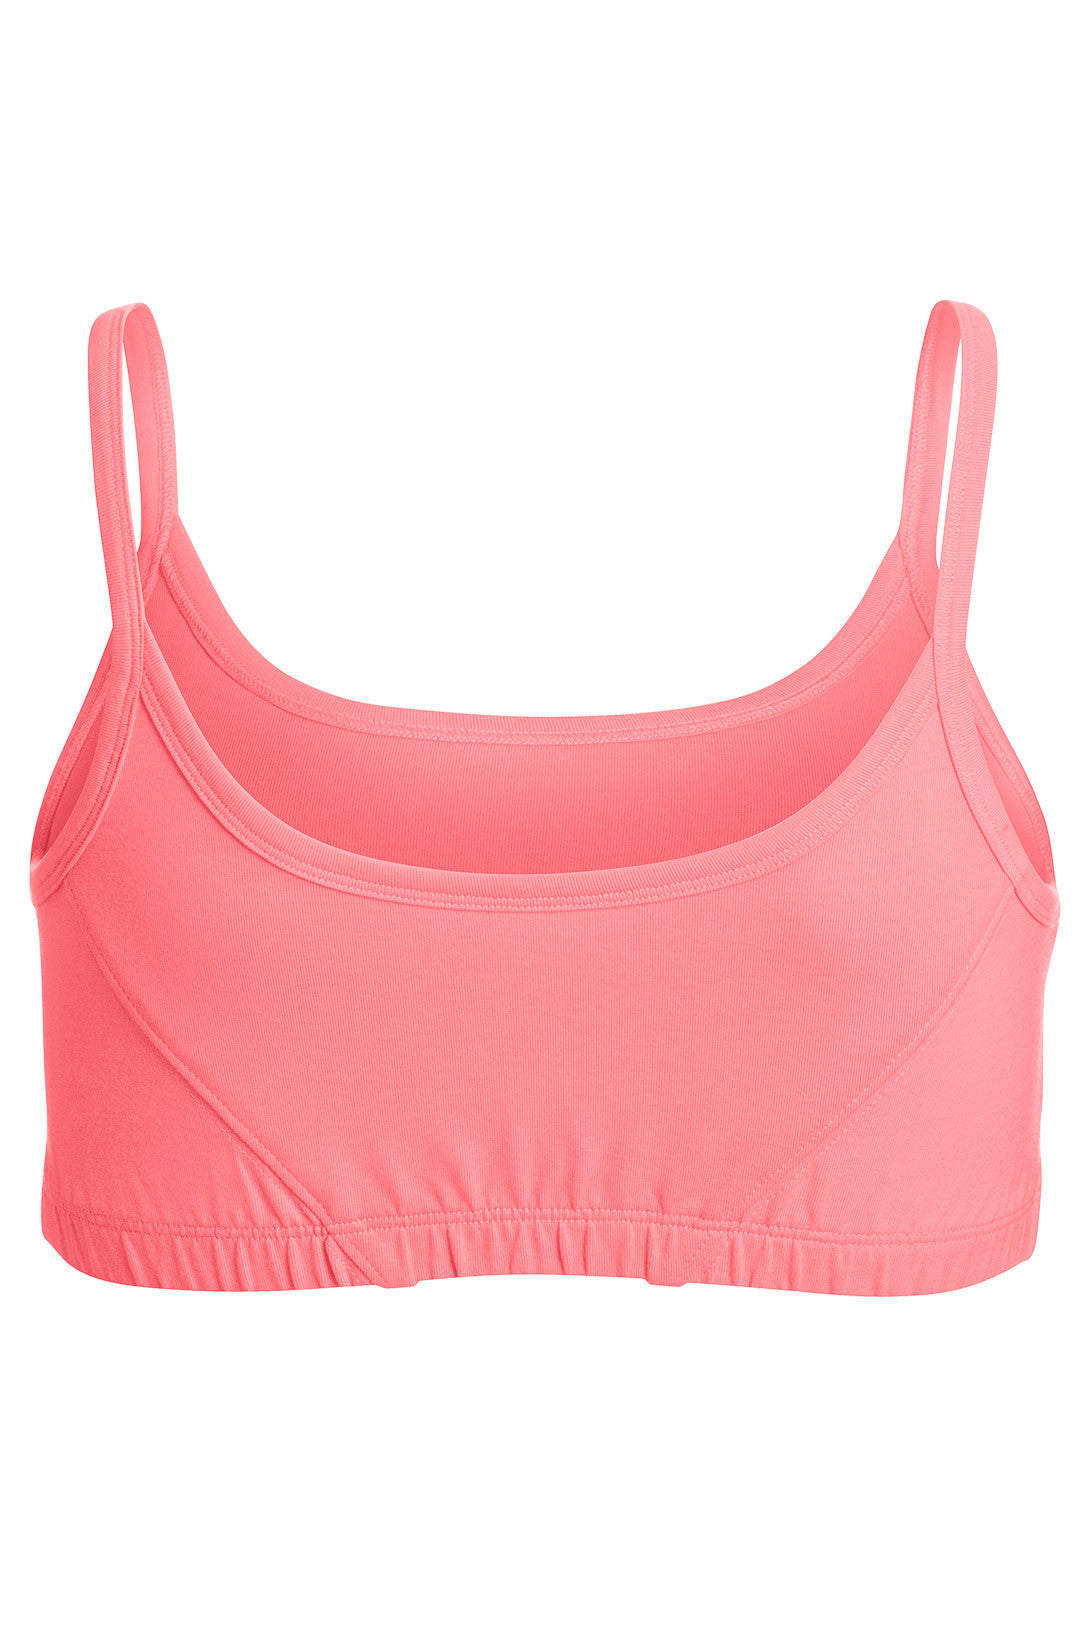 Organic Cotton Yoga Bra  Best natural sports bra for breast care